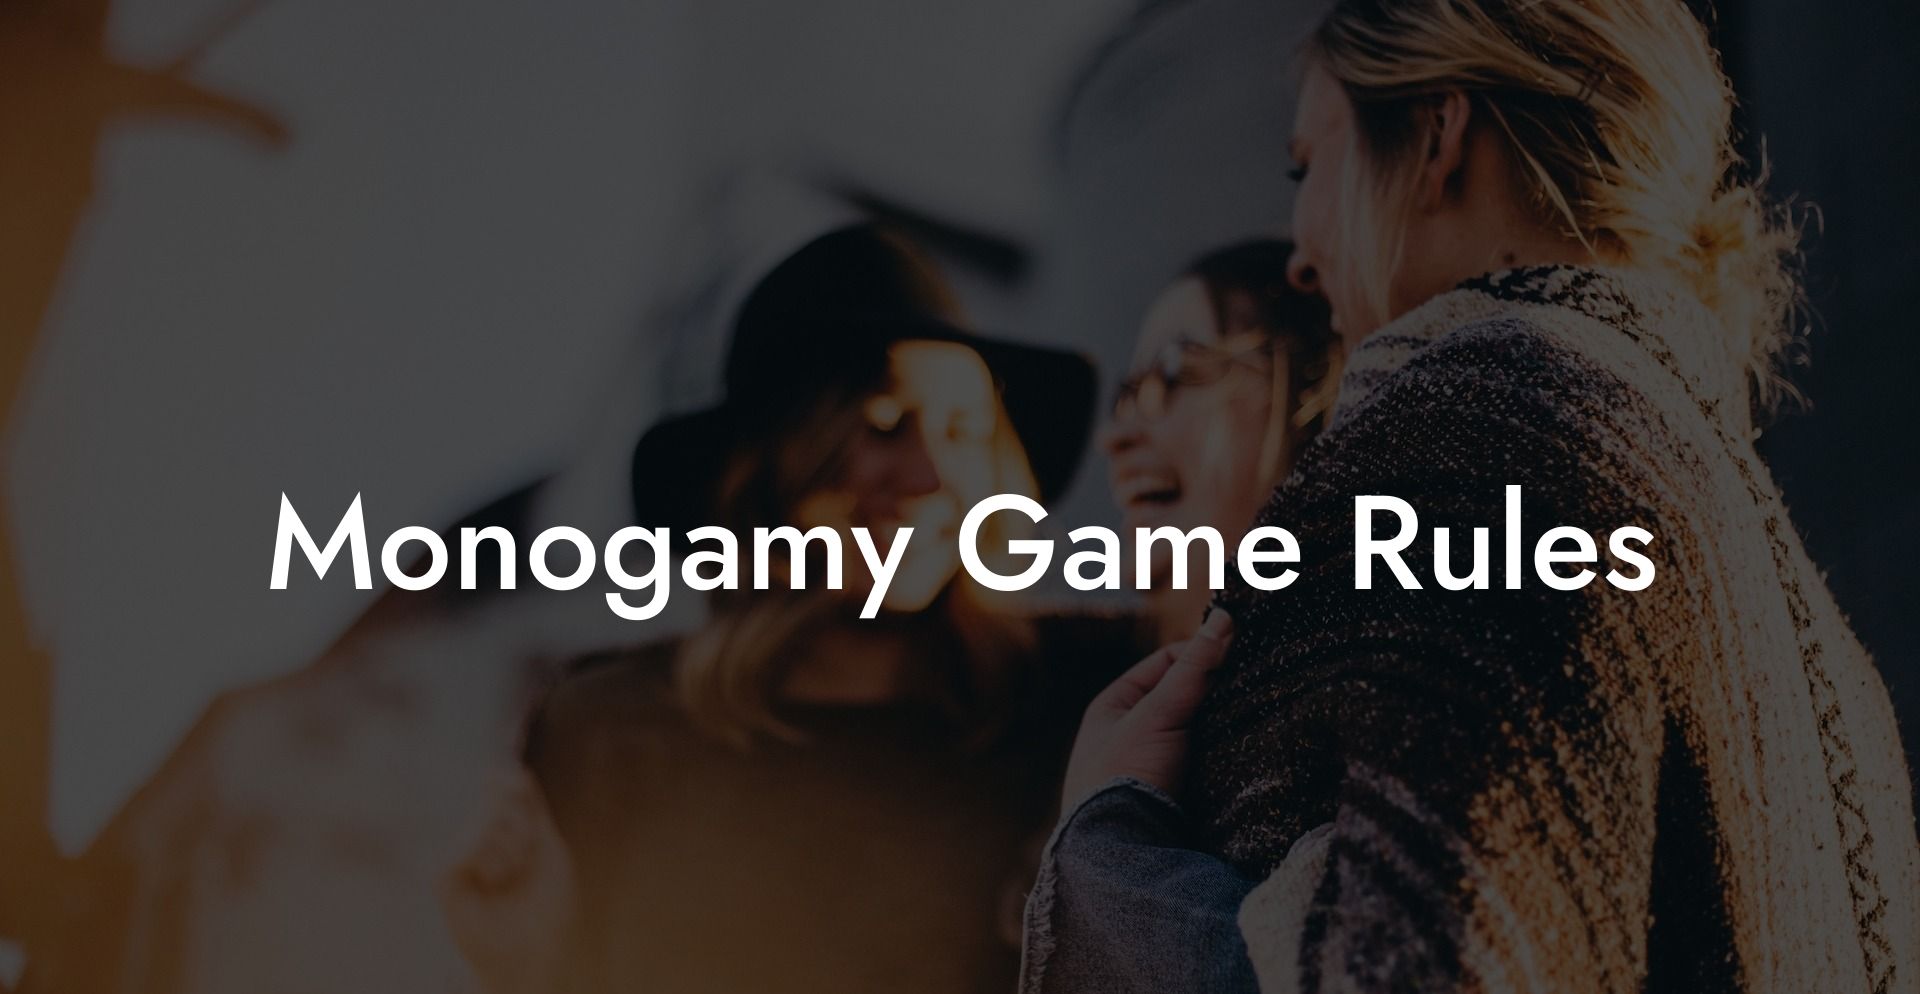 Monogamy Game Rules